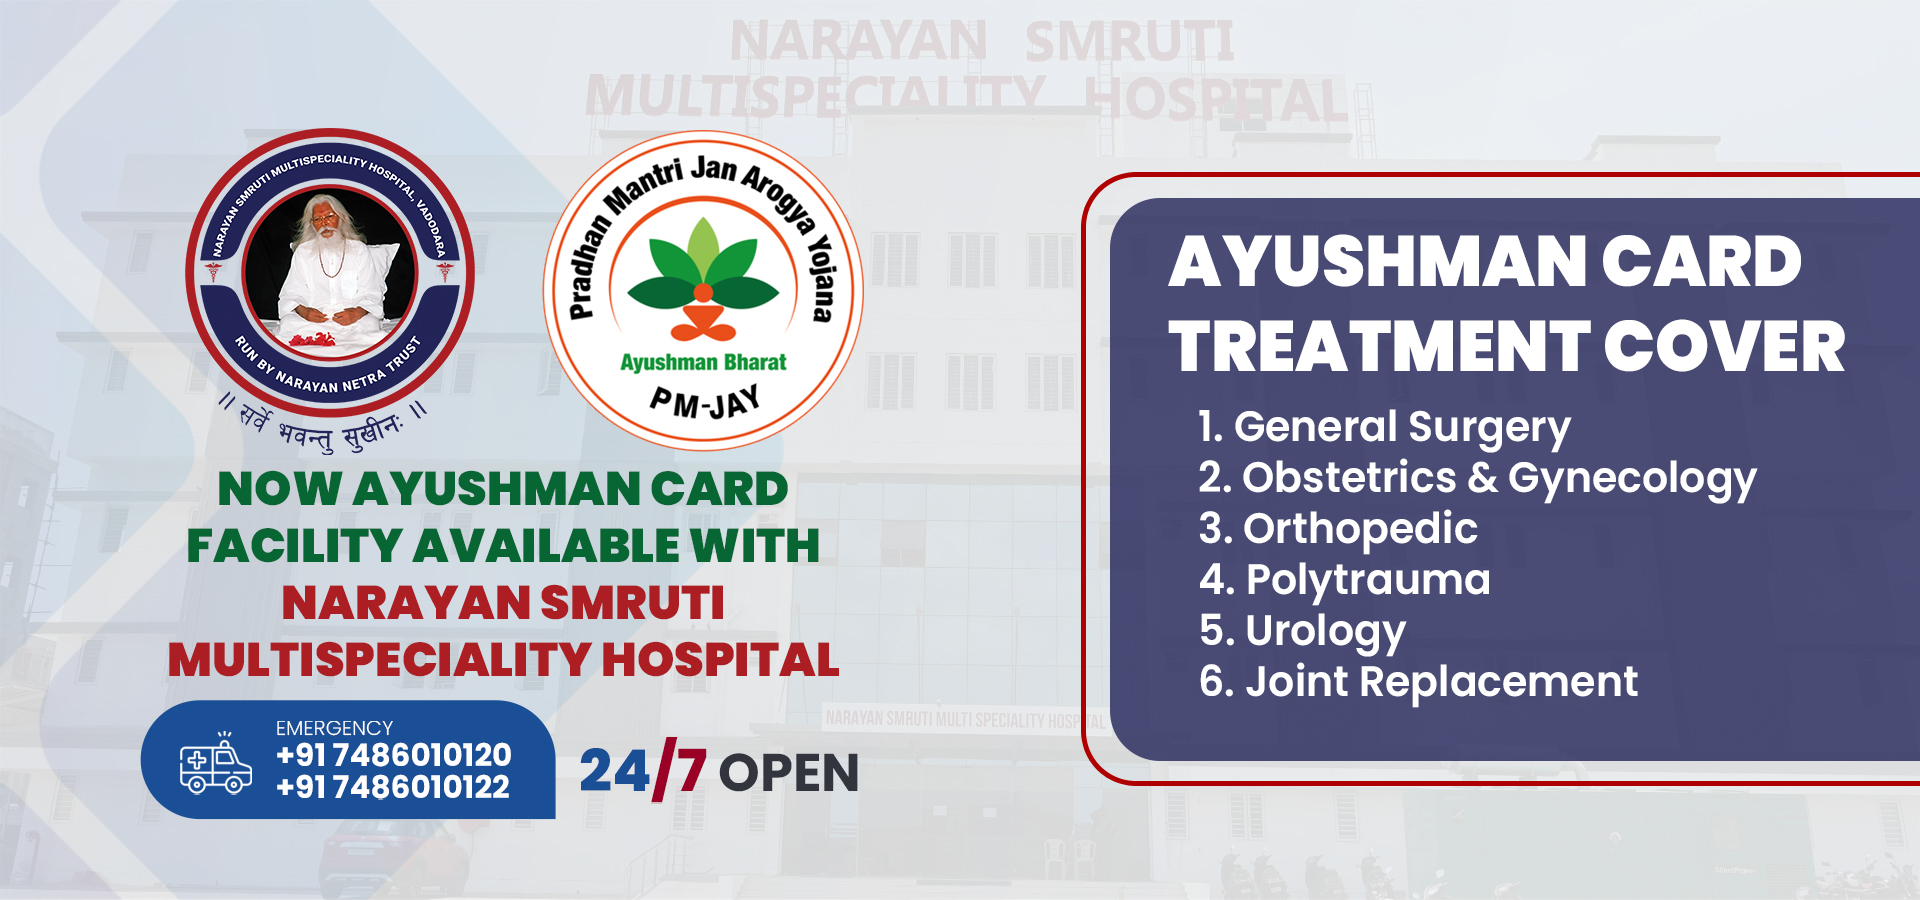 Narayan Smruti Multispeciality Hospital-Ayushman Card